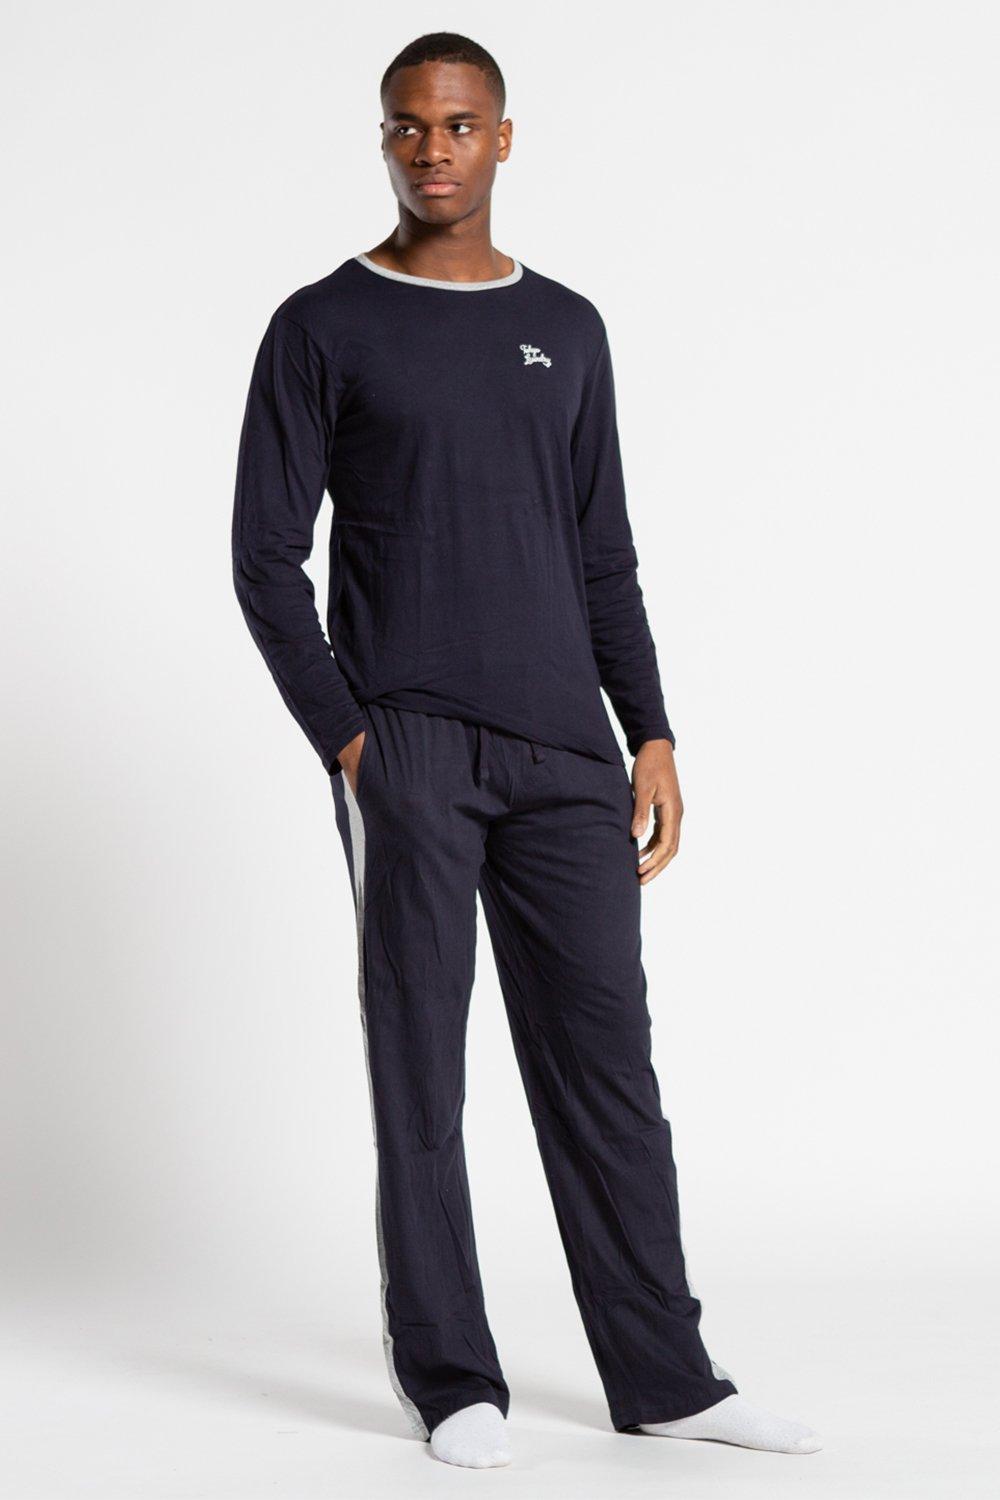 Tokyo Laundry Men's Cotton 2-Piece Long Sleeve Top and Bottoms Loungewear Set|Size: M|dark navy